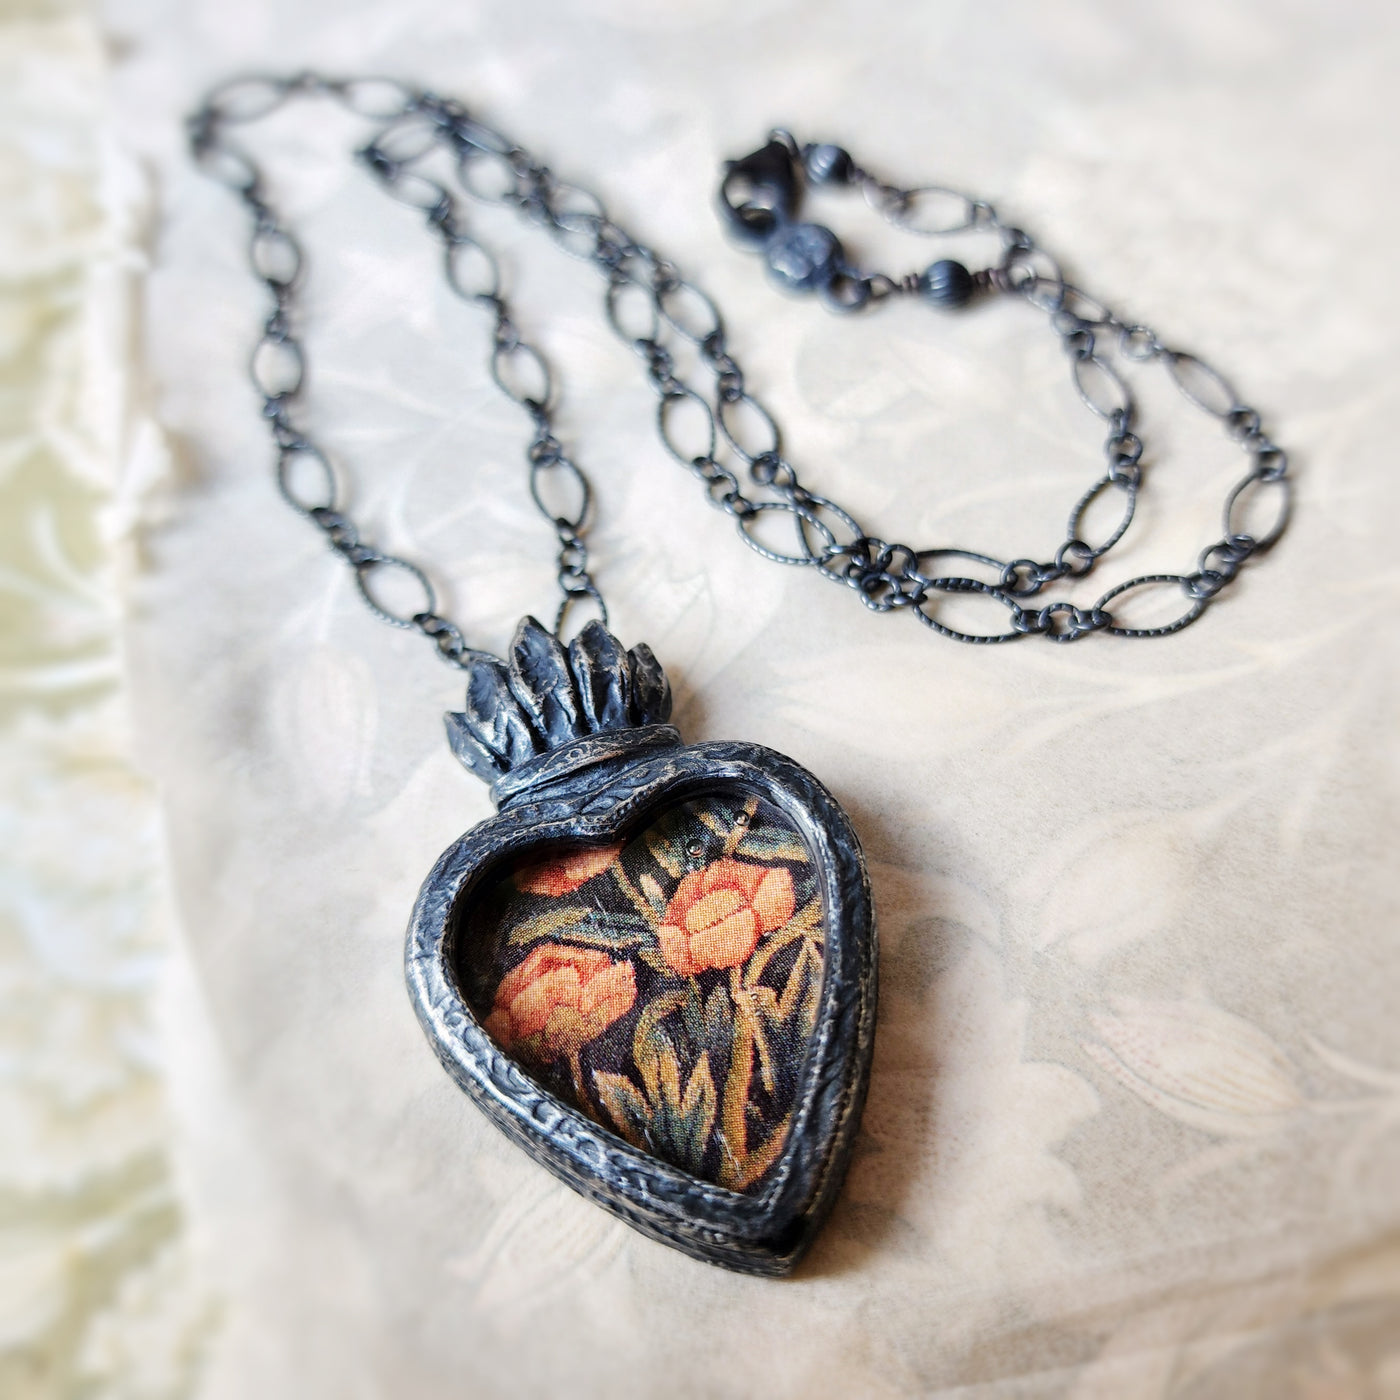 geminae rosae - sacred heart amulet